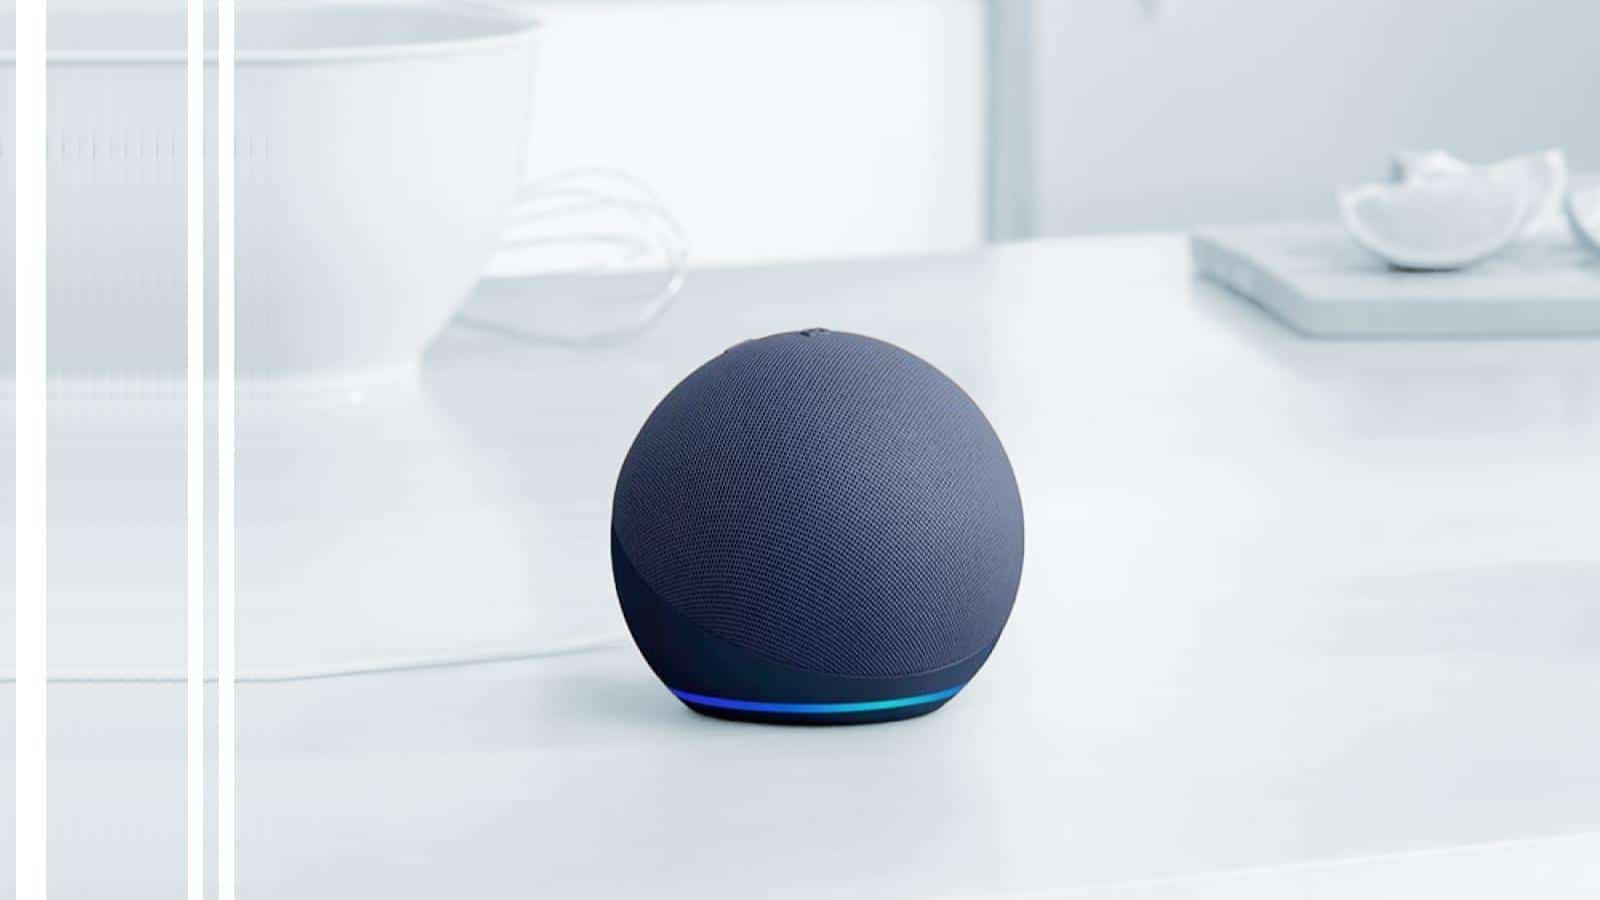 Echo Dot (5e génération, modèle 2022) - Enceinte…